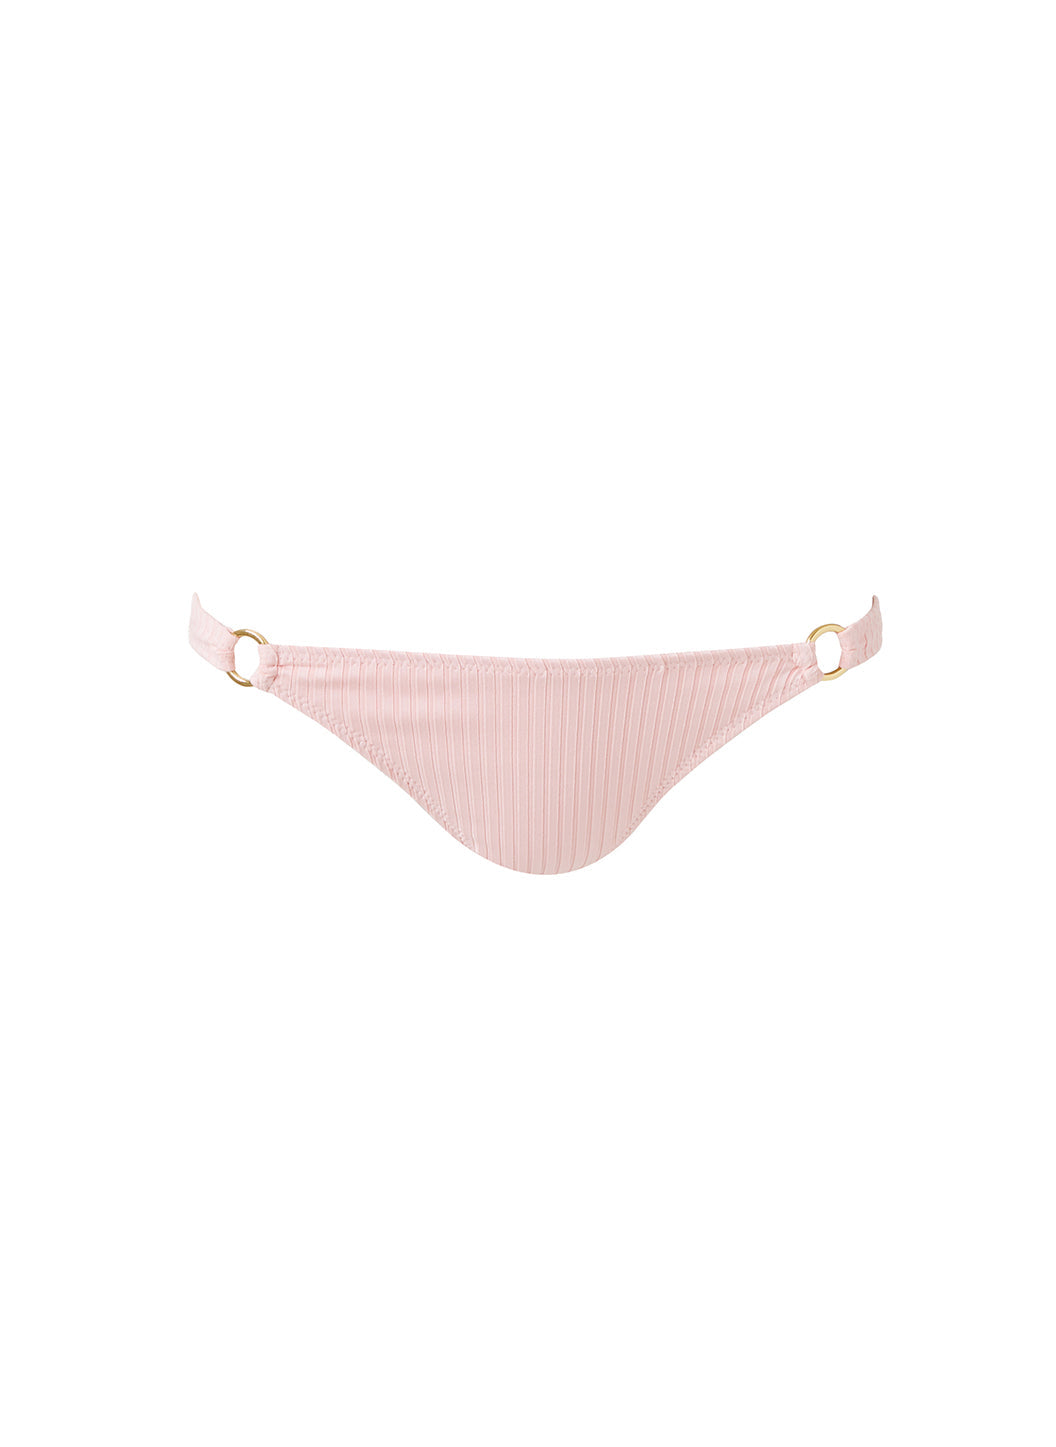 Tortola bandeau bikini top in pink - Melissa Odabash